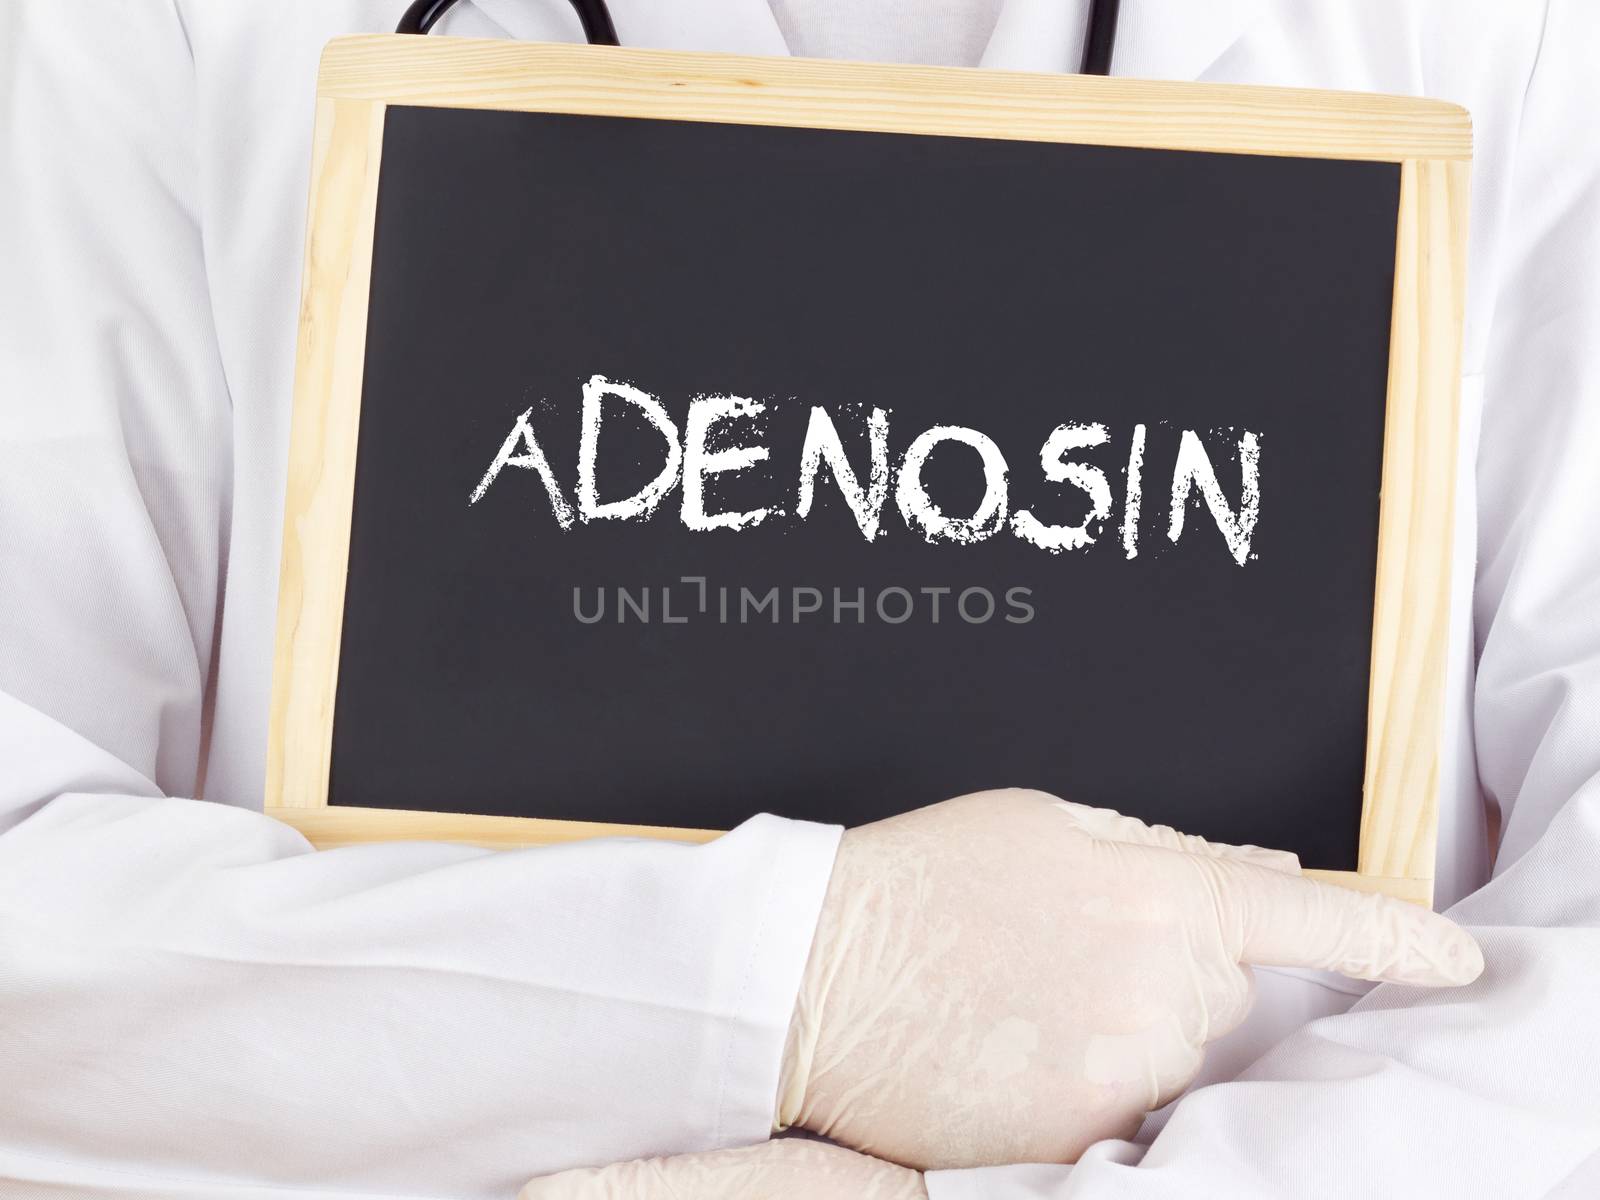 Doctor shows information: adenine riboside in german